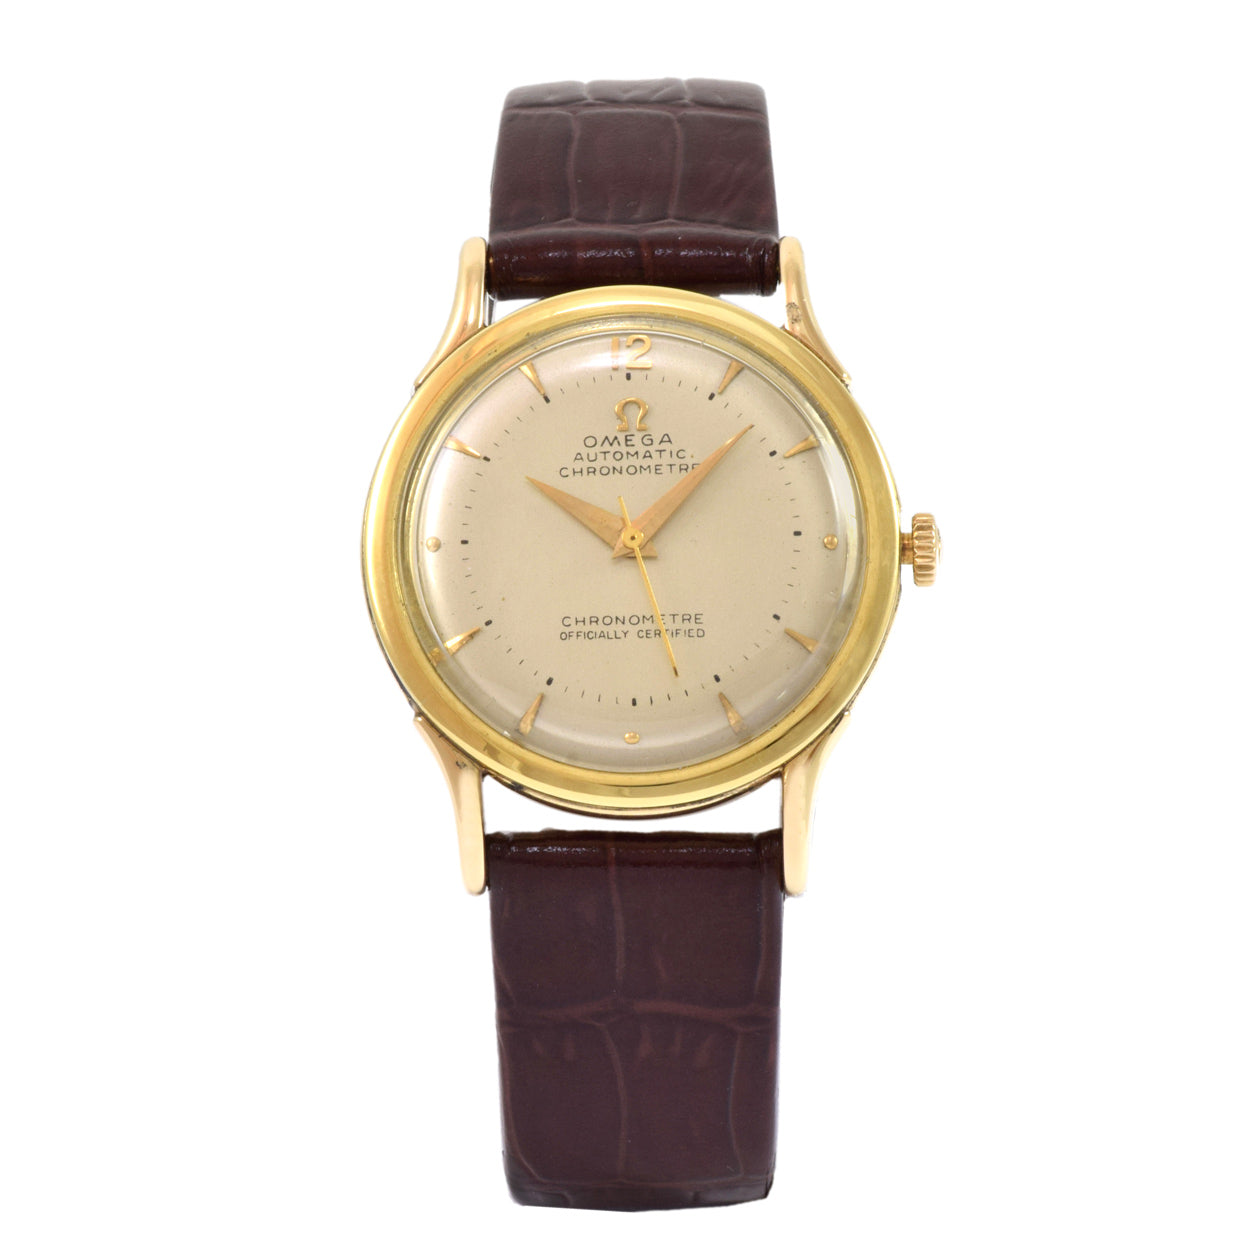 Vintage Omega 1950's  Automatic Chronometre Watch